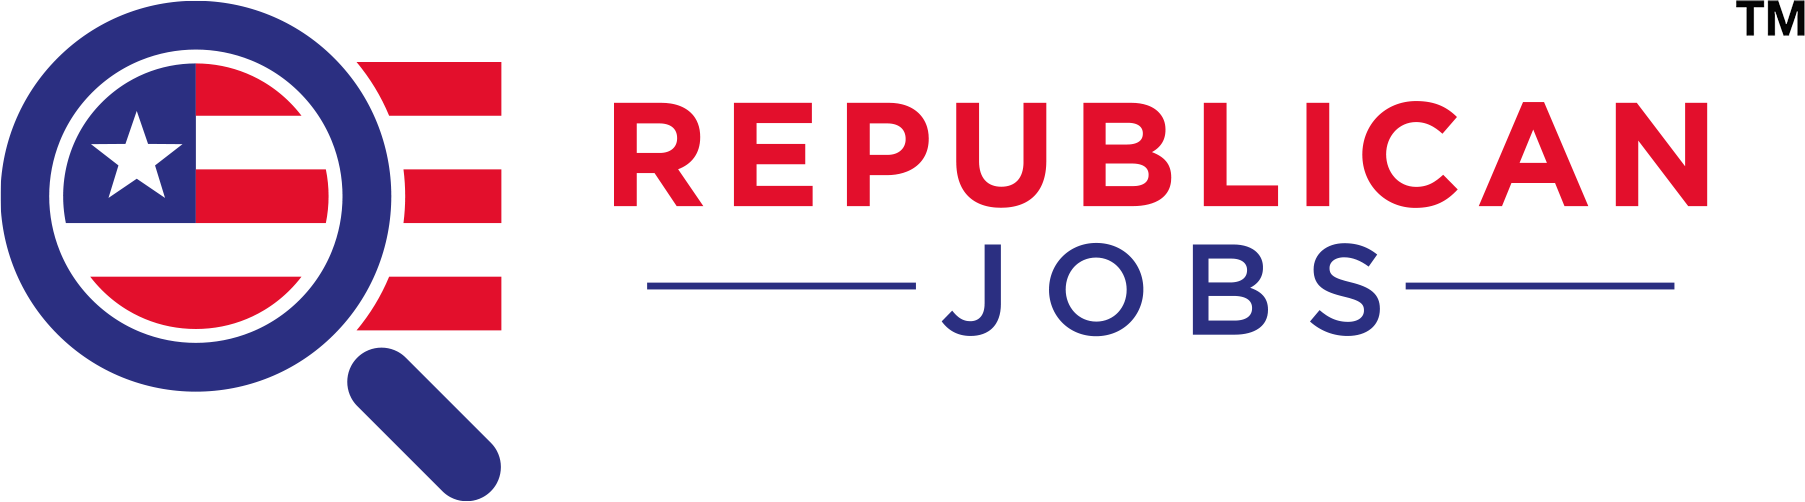 Republican jobs in Baton Rouge Louisiana jobs